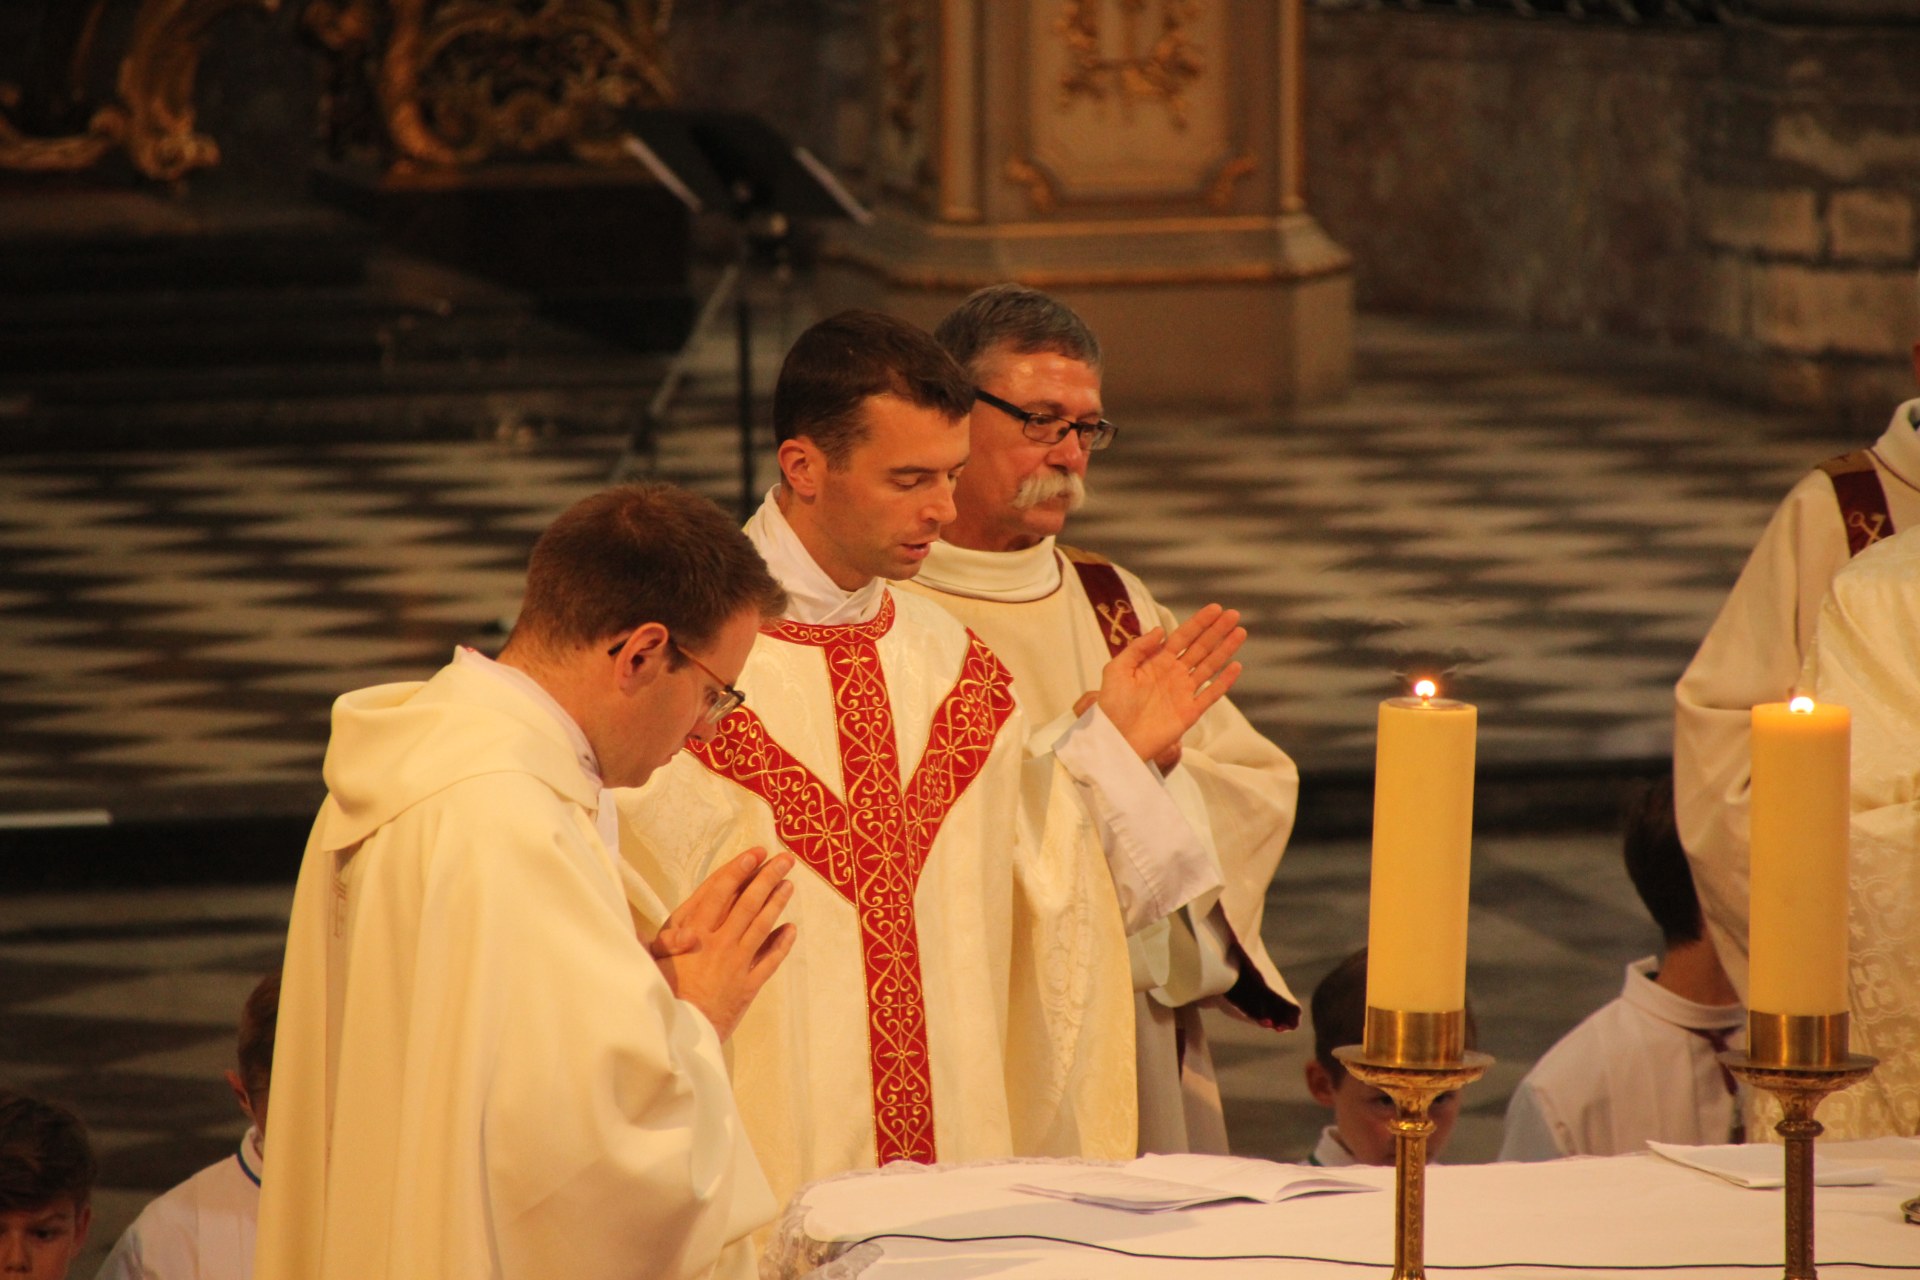 Prière eucharistique